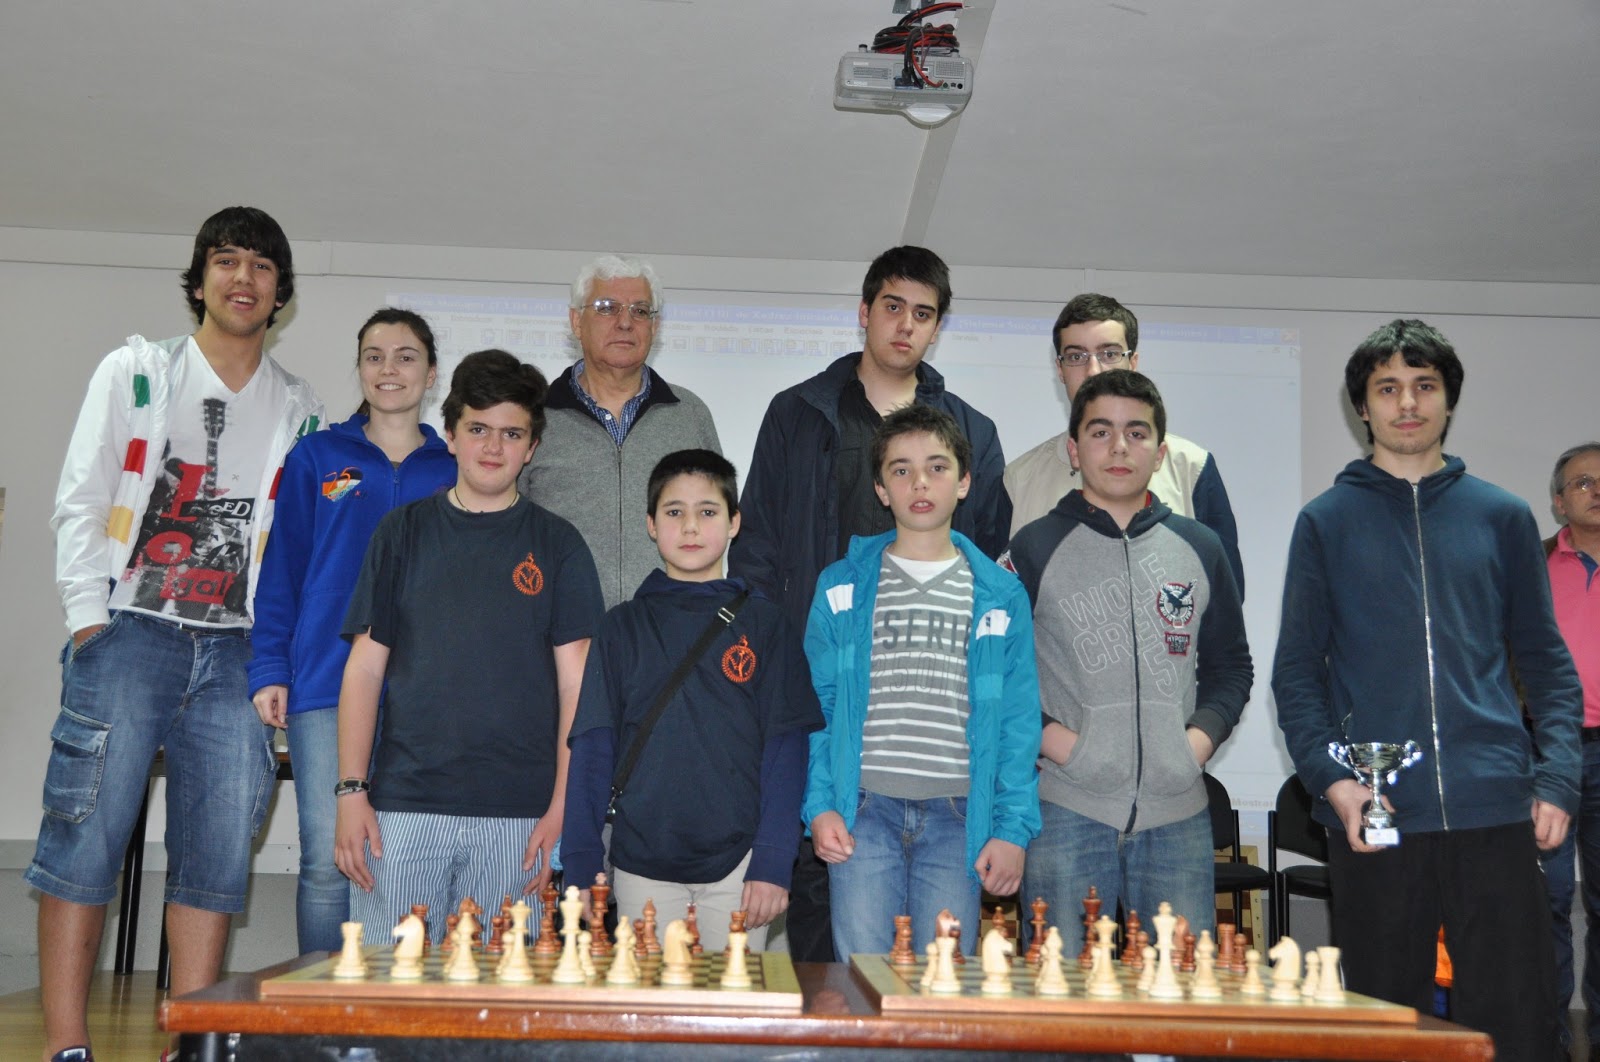 xadrez-empate  BLOG DO PAULO RICARDO MONTEIRO